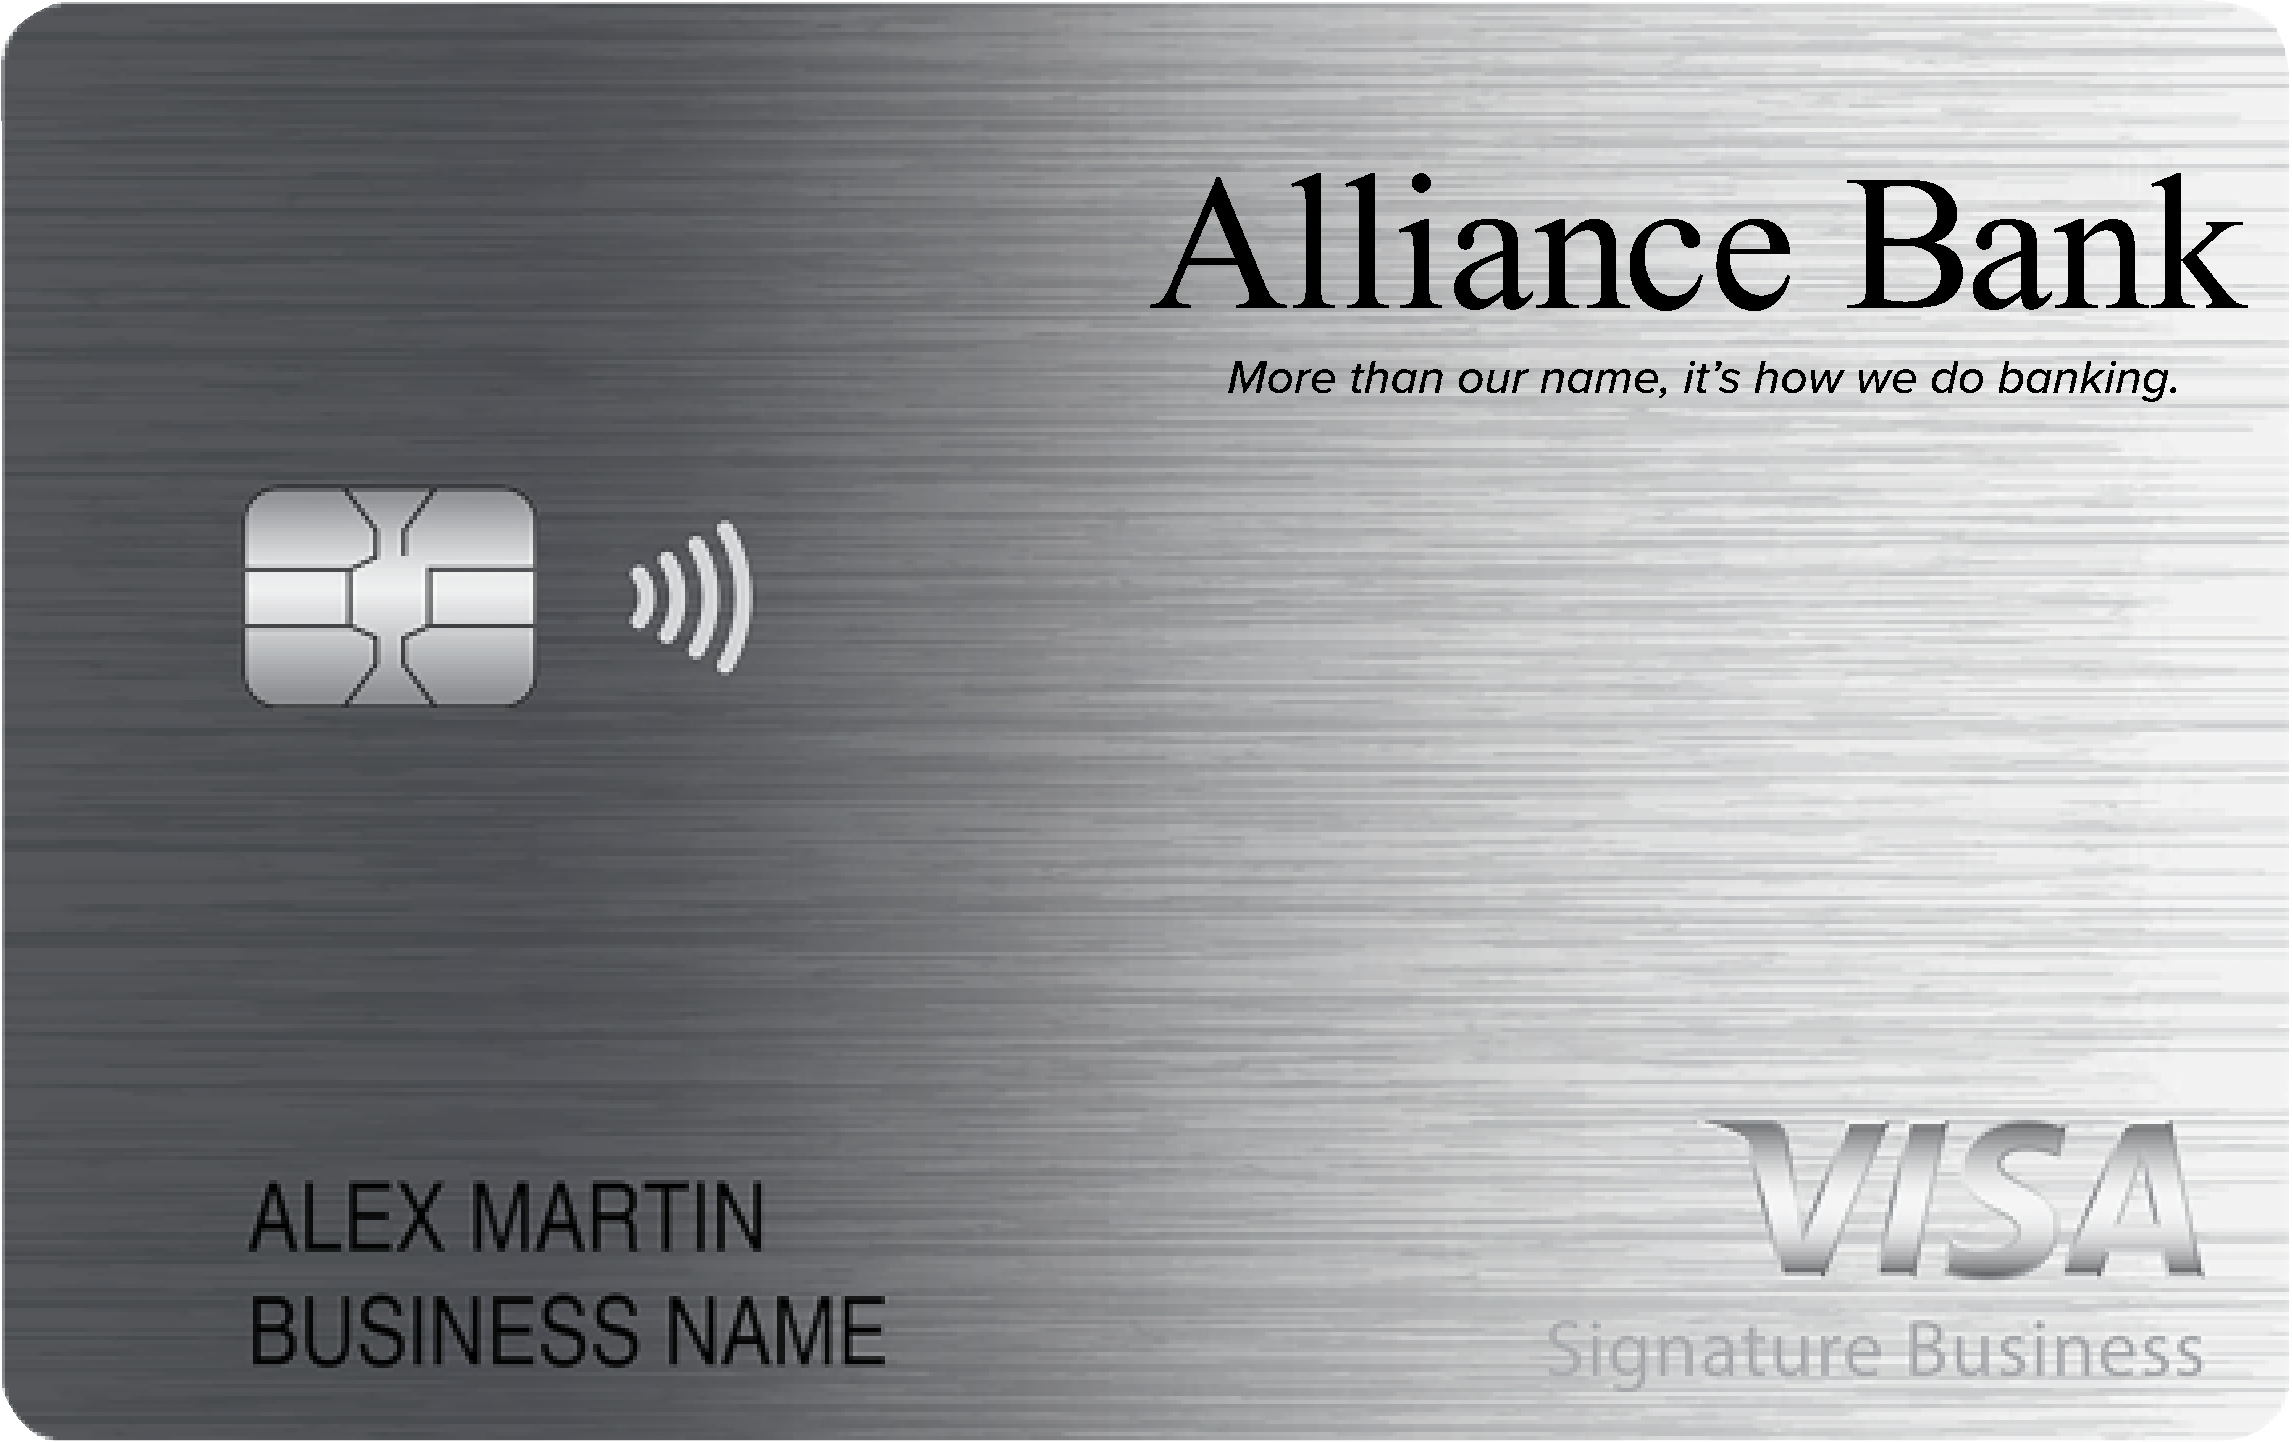 Alliance Bank Smart Business Rewards Card